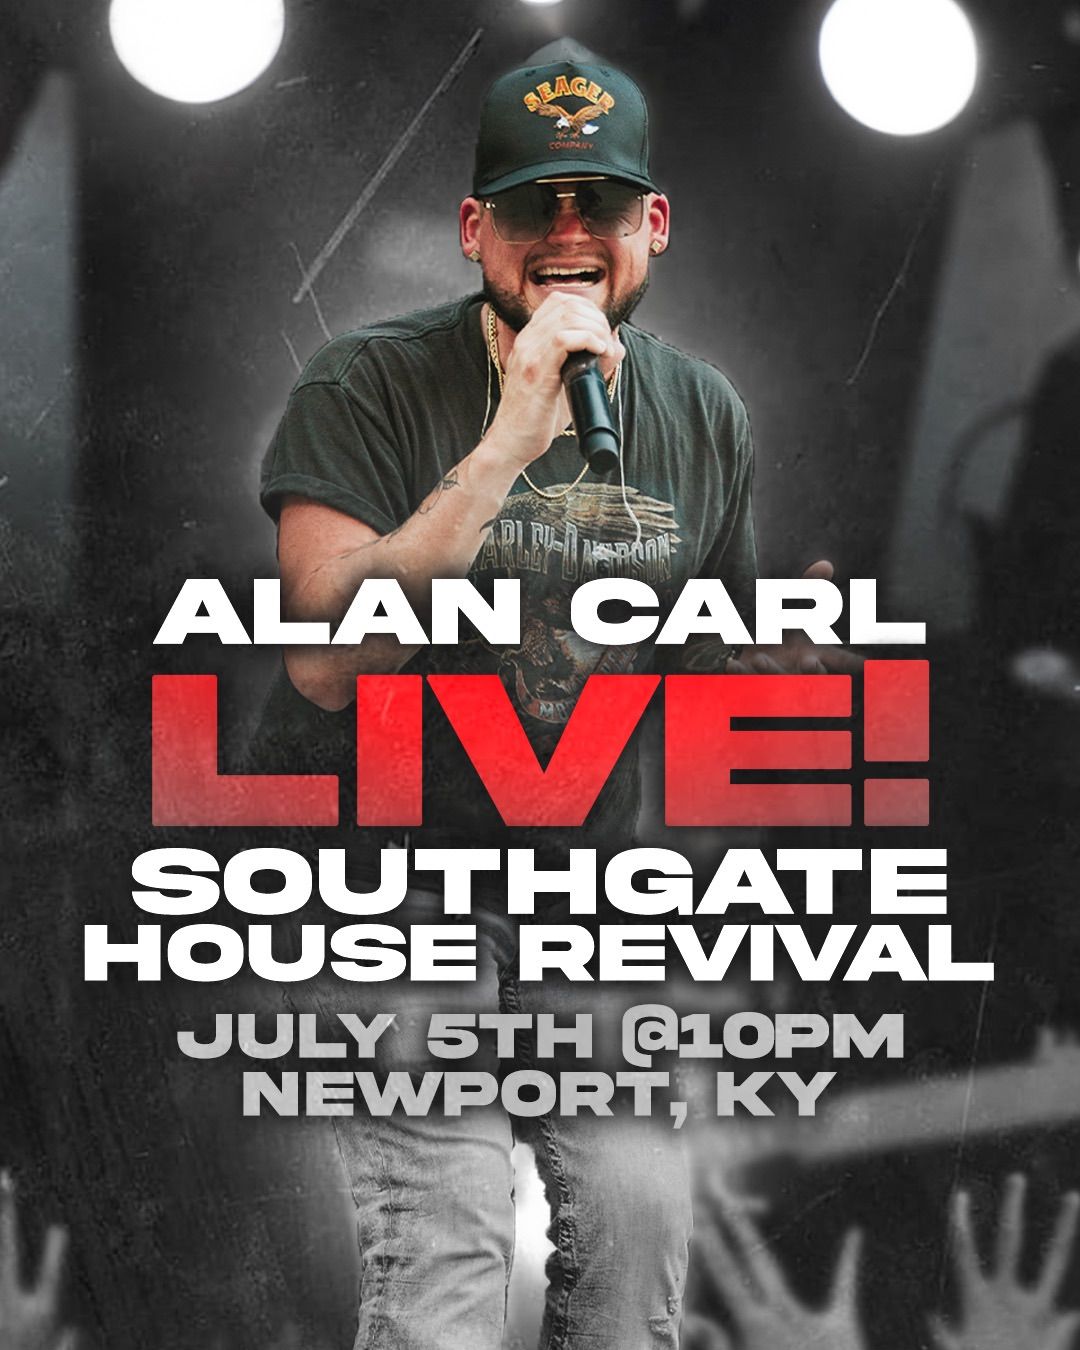 The Southgate revival house presents Alan Carl